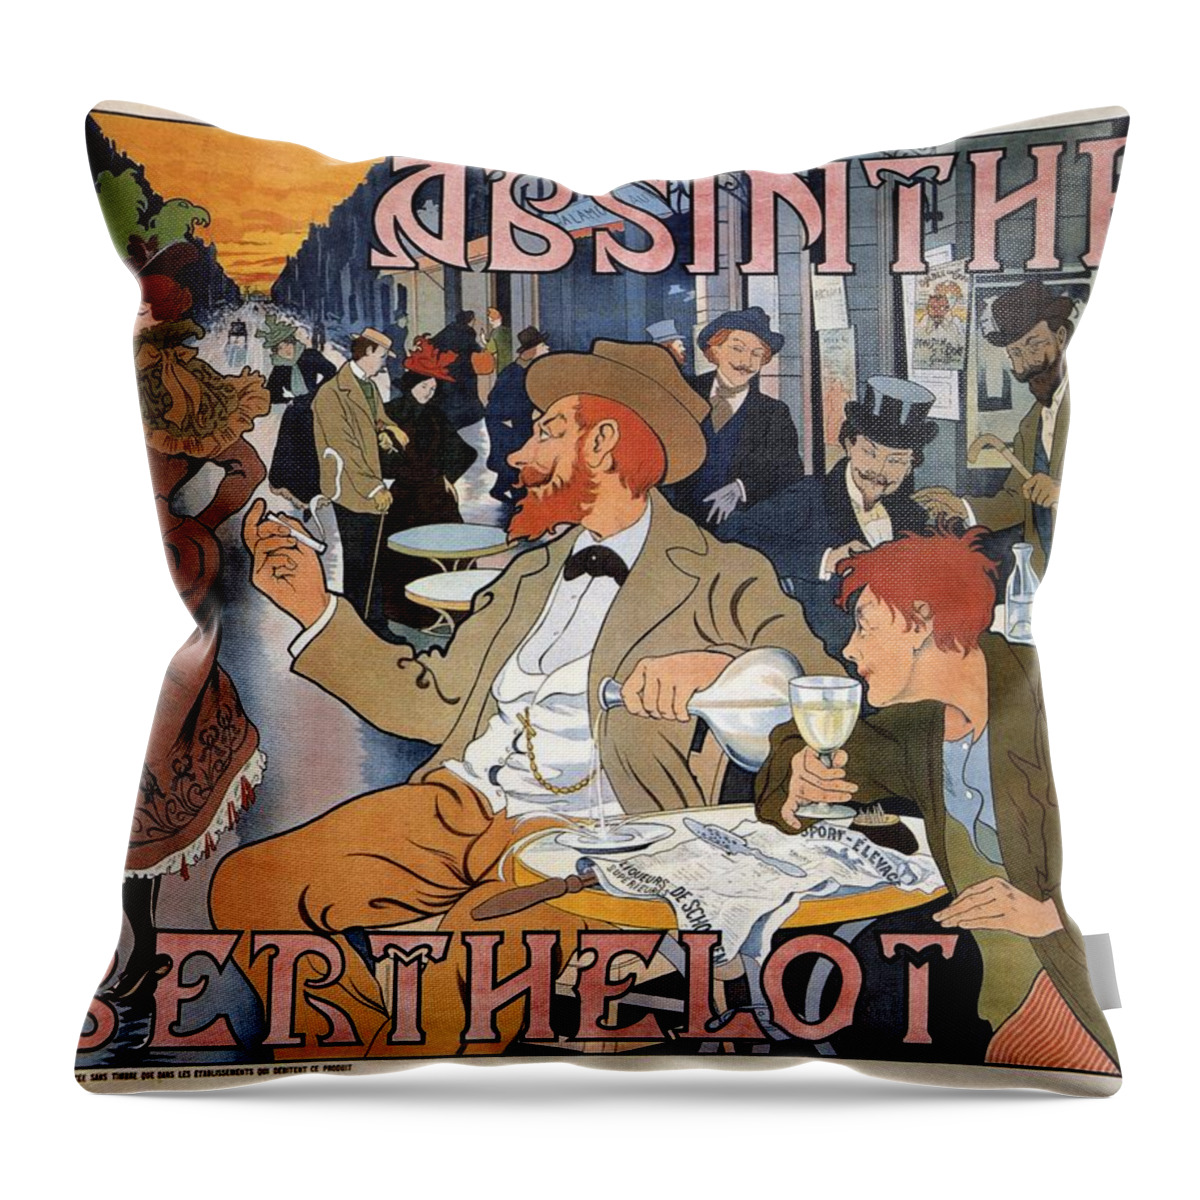 Absinthe Berthelot Throw Pillow featuring the mixed media Absinthe Berthelot - Vintage Liquor Advertising Poster by Studio Grafiikka